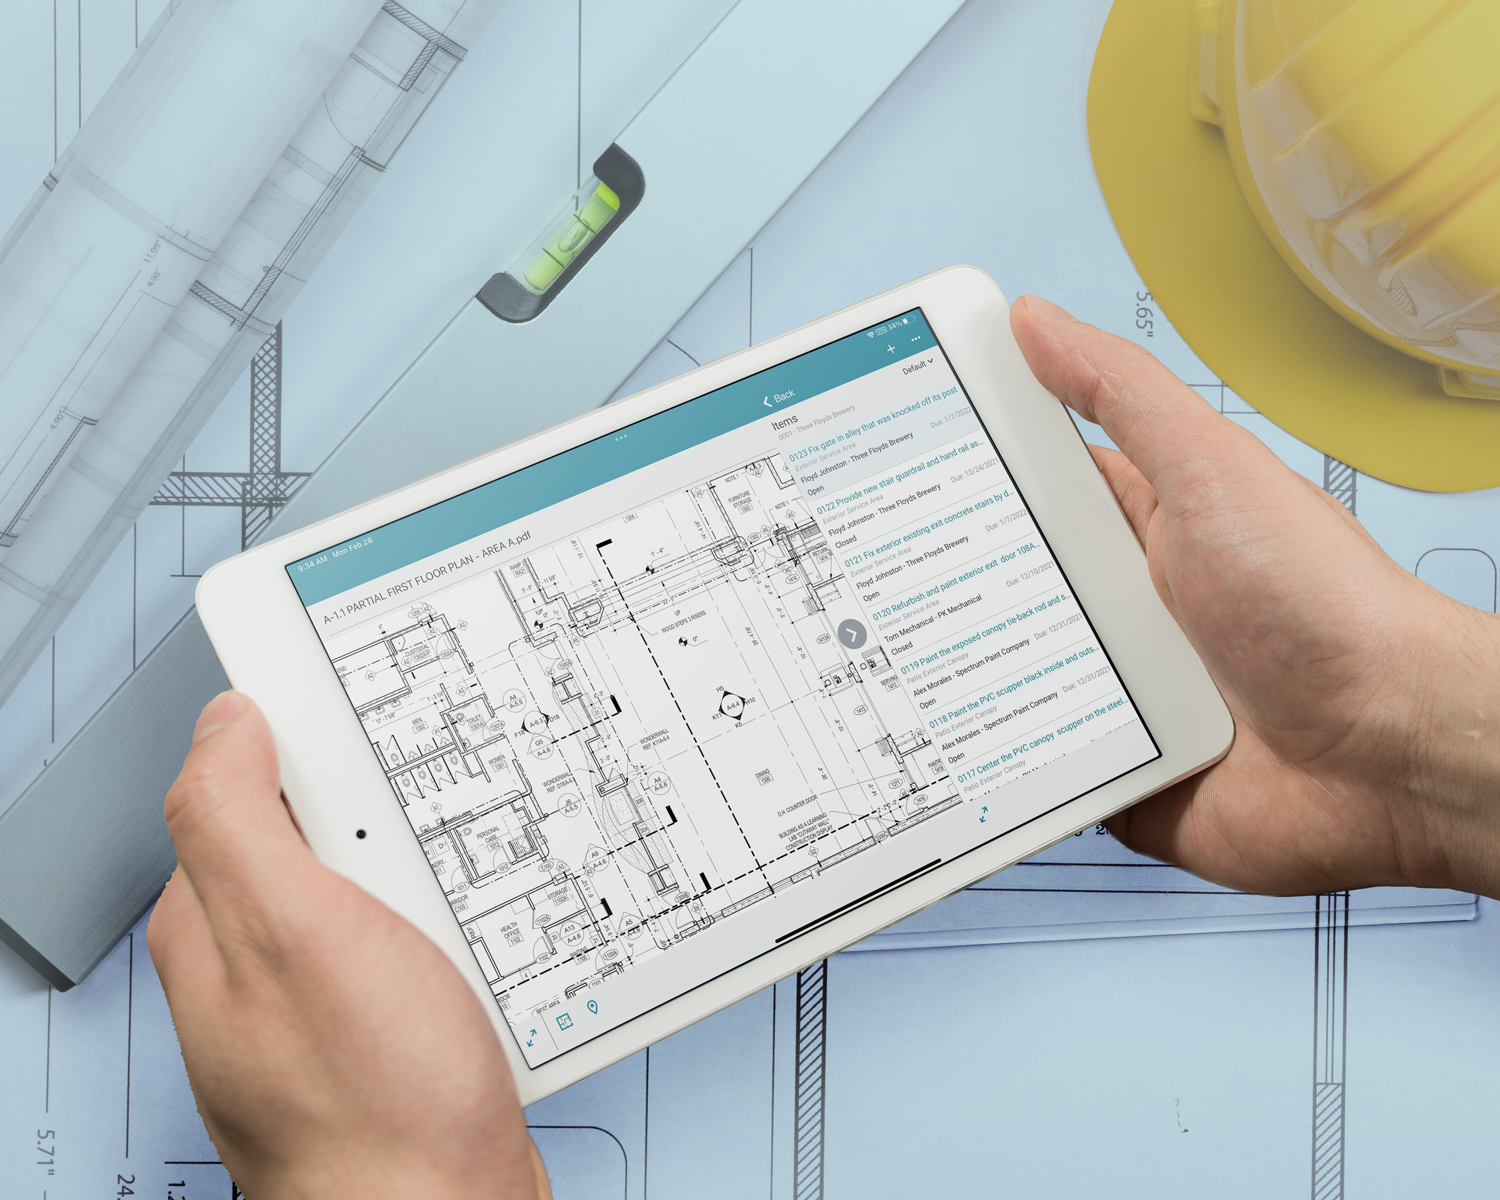 Mobile construction software app